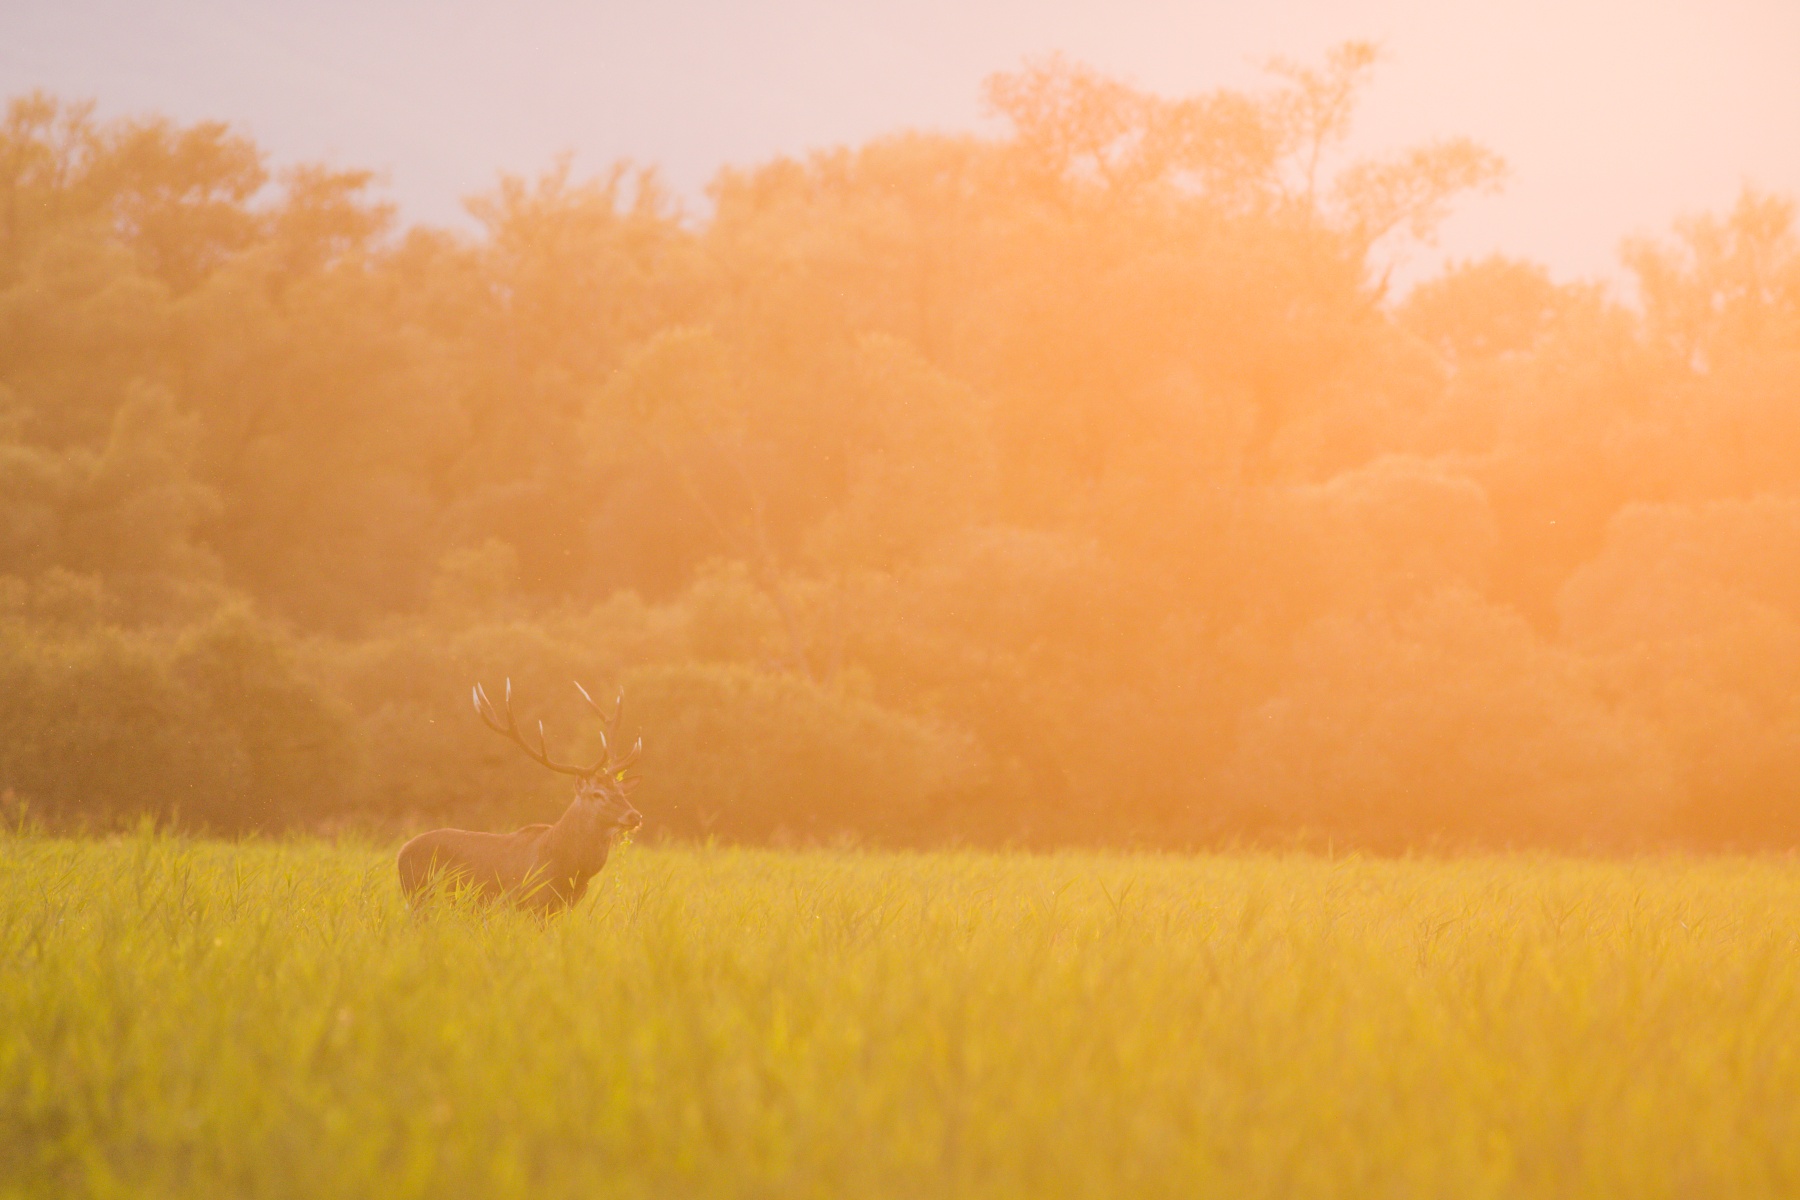 jeleň lesný (Cervus elaphus) Red deer, NPR Kláštorské lúky, Turčianska kotlina, Slovensko Canon EOS 6D mark II, Canon 400 mm f5.6 L USM, f6.3, 1/400, ISO 1000, 15. september 2019